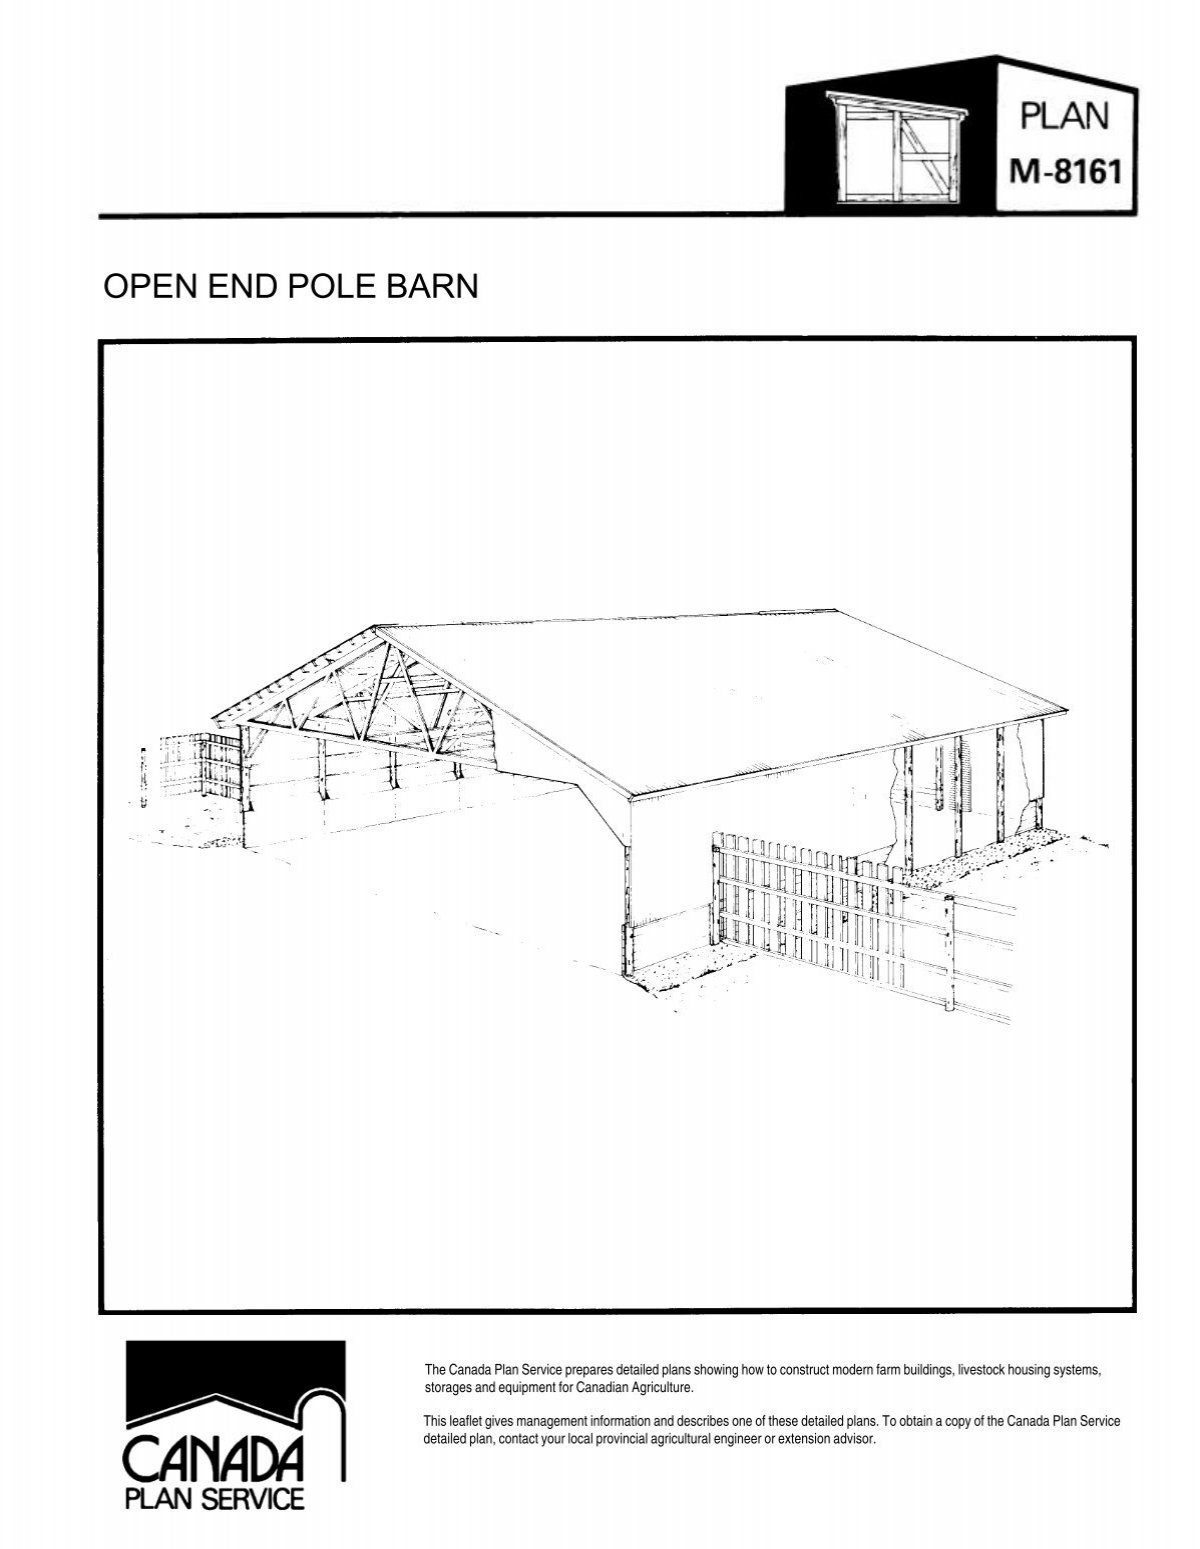 Open End Pole Barn Leaflet (Metric) - Canada Plan Service 